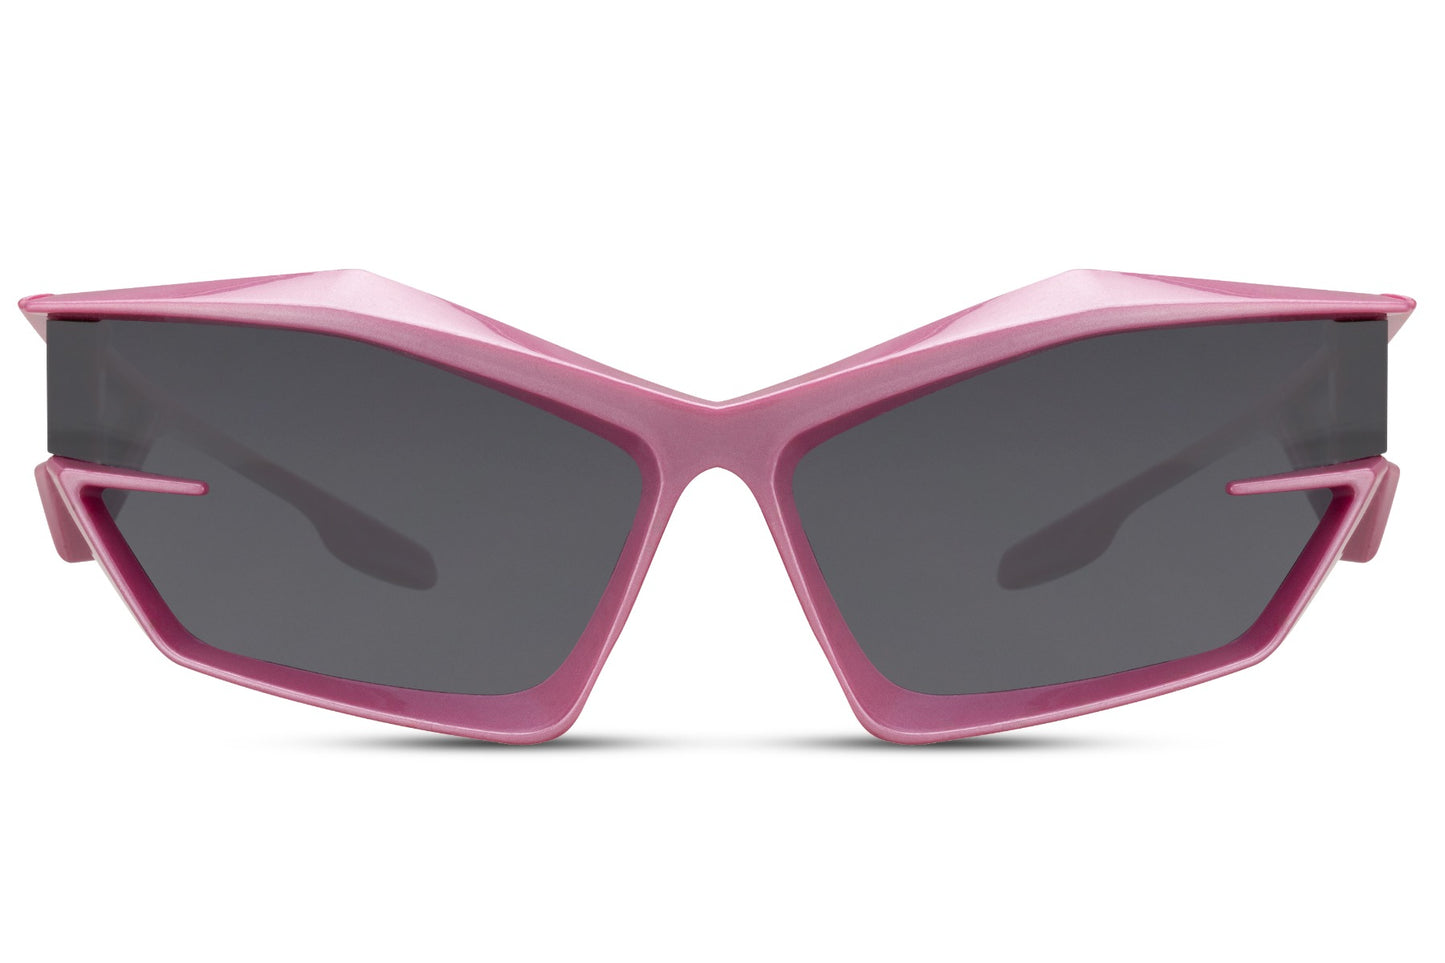 Visor Style Party Sunglasses